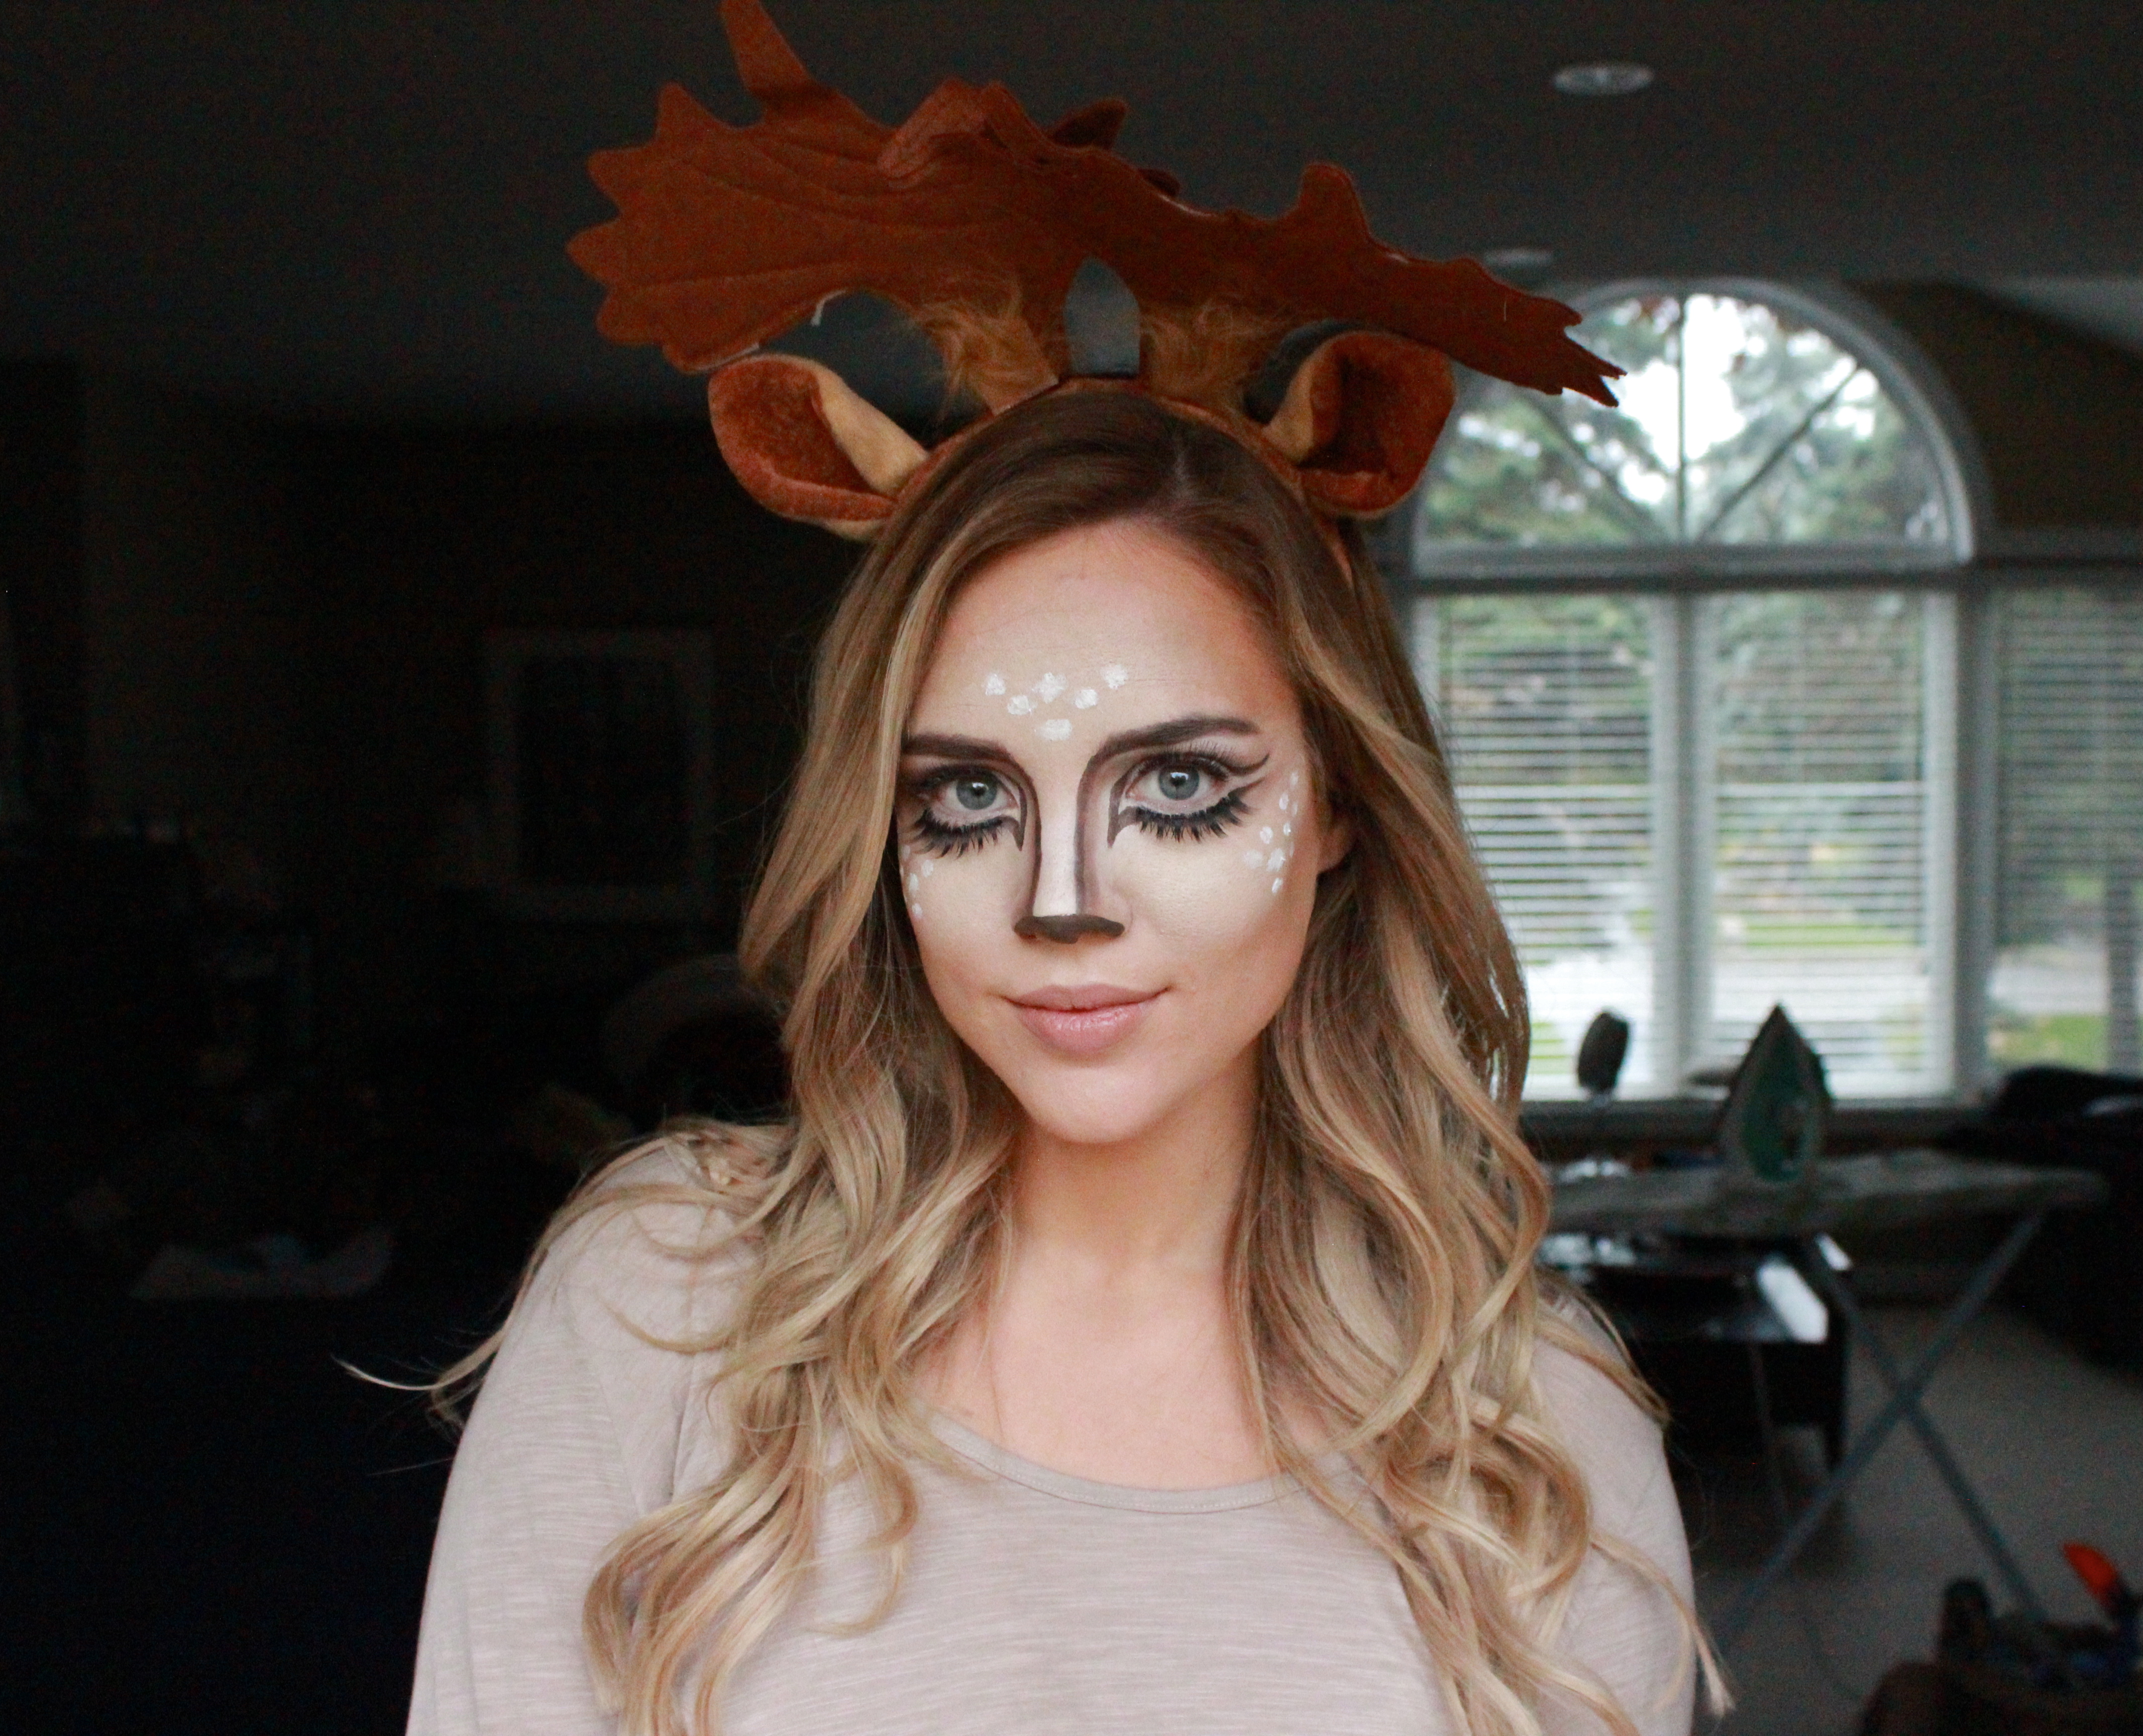 Halloween makeup tutorial: Try this easy deer costume